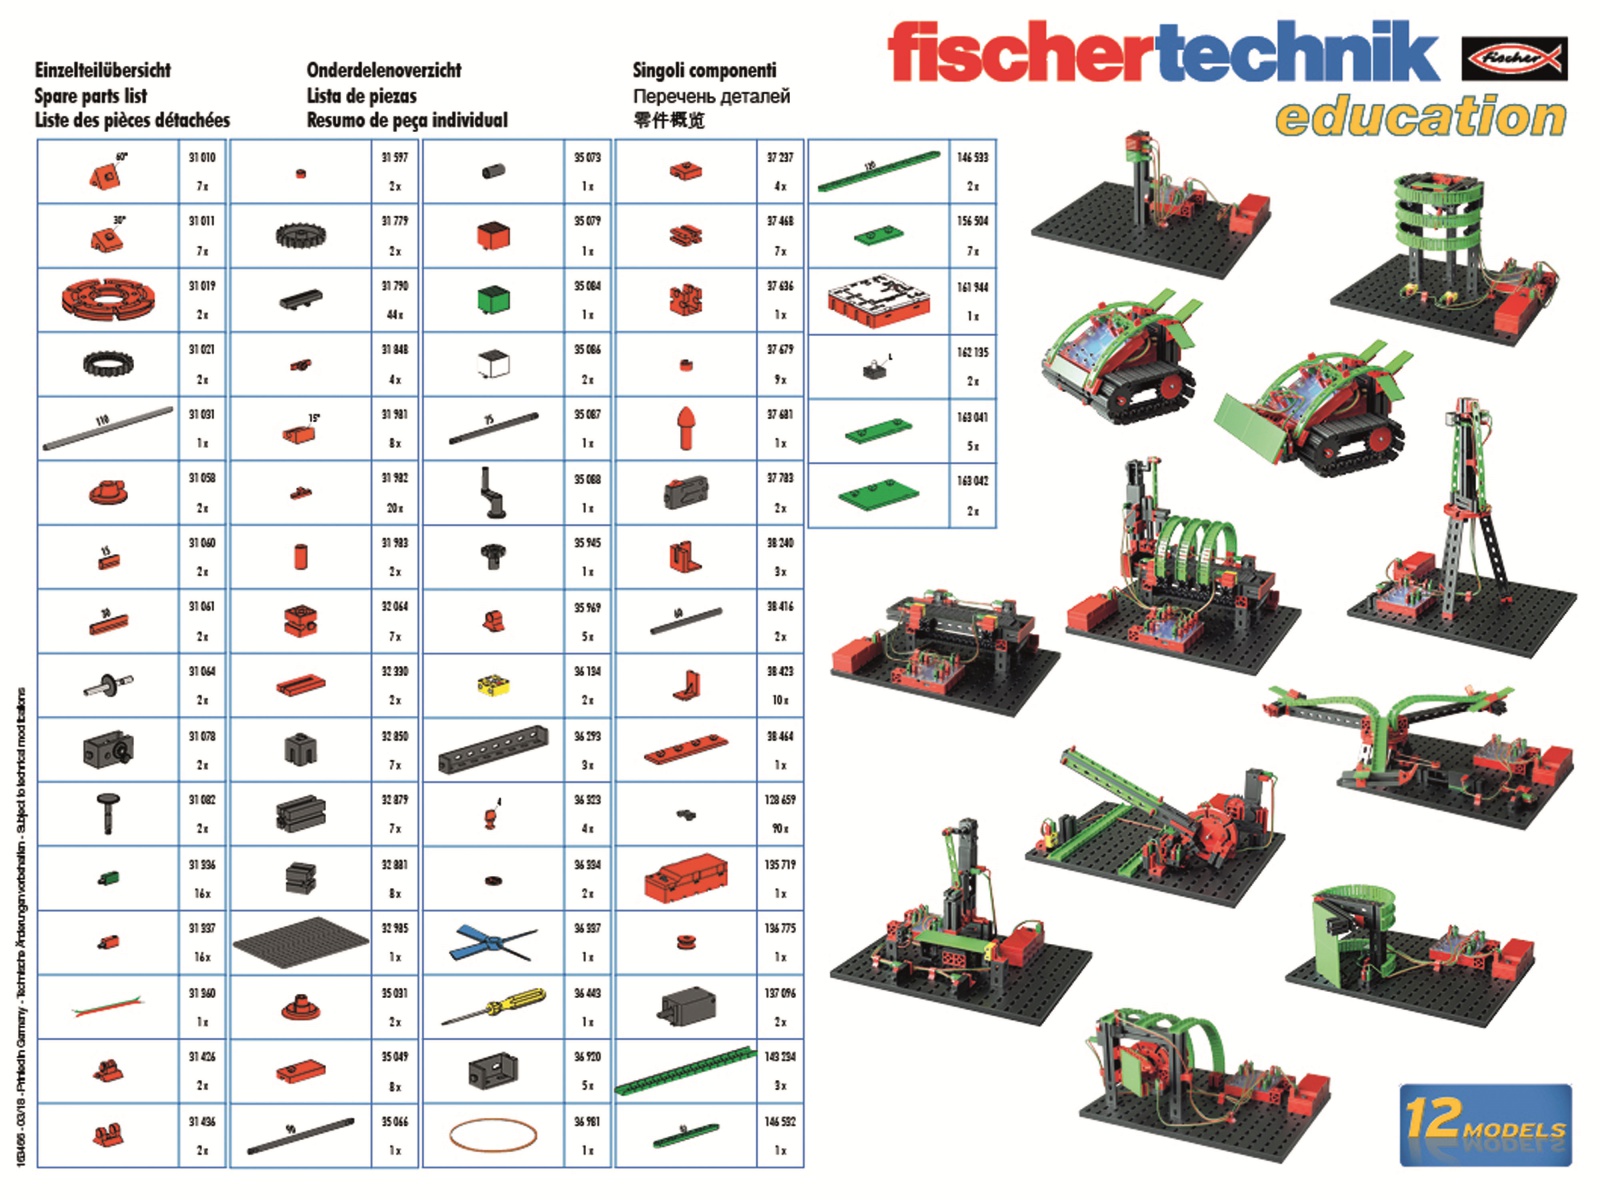 FISCHERTECHNIK Education, 540587, ROBOTICS BT Beginner